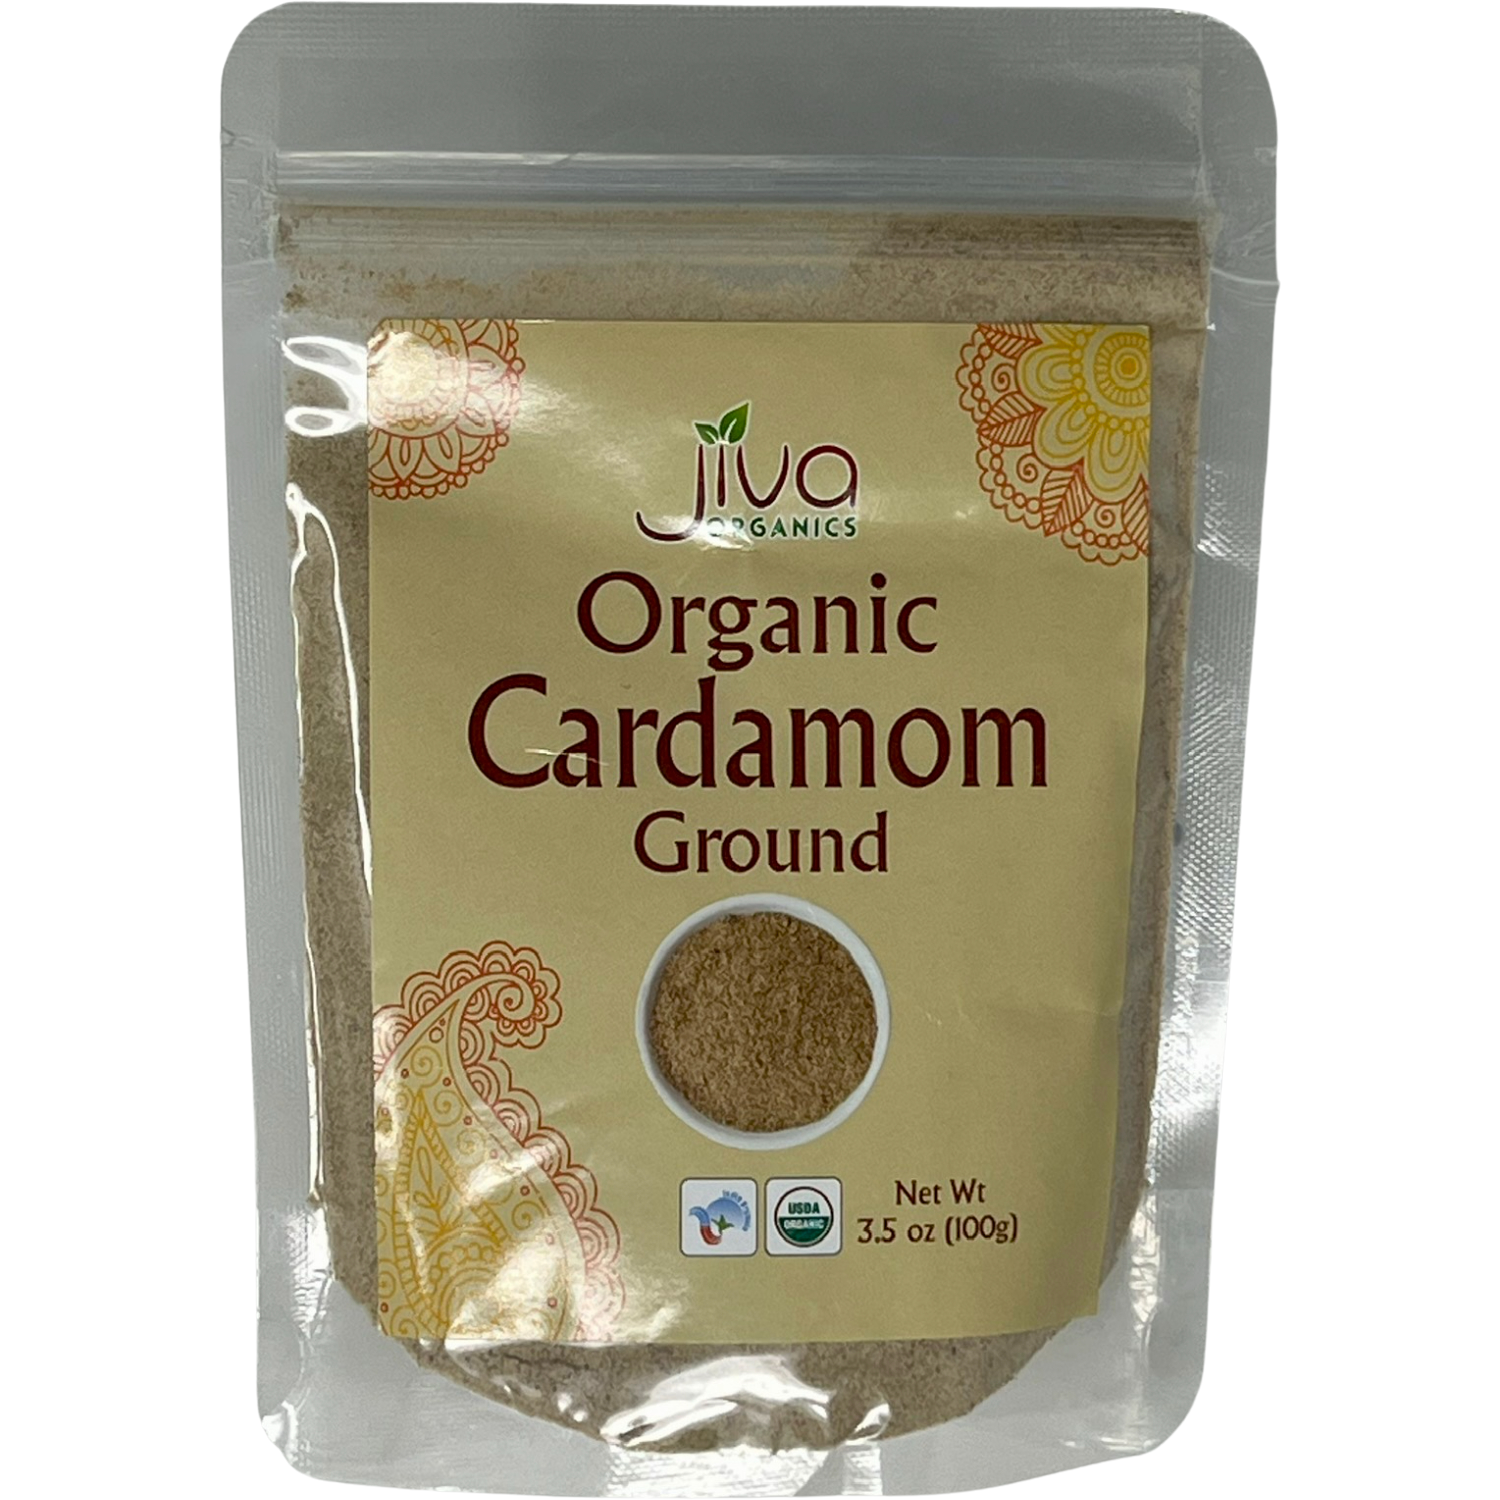 Case of 24 - Jiva Organics Organic Cardamom Ground - 100 Gm (3.5 Oz) [50% Off]